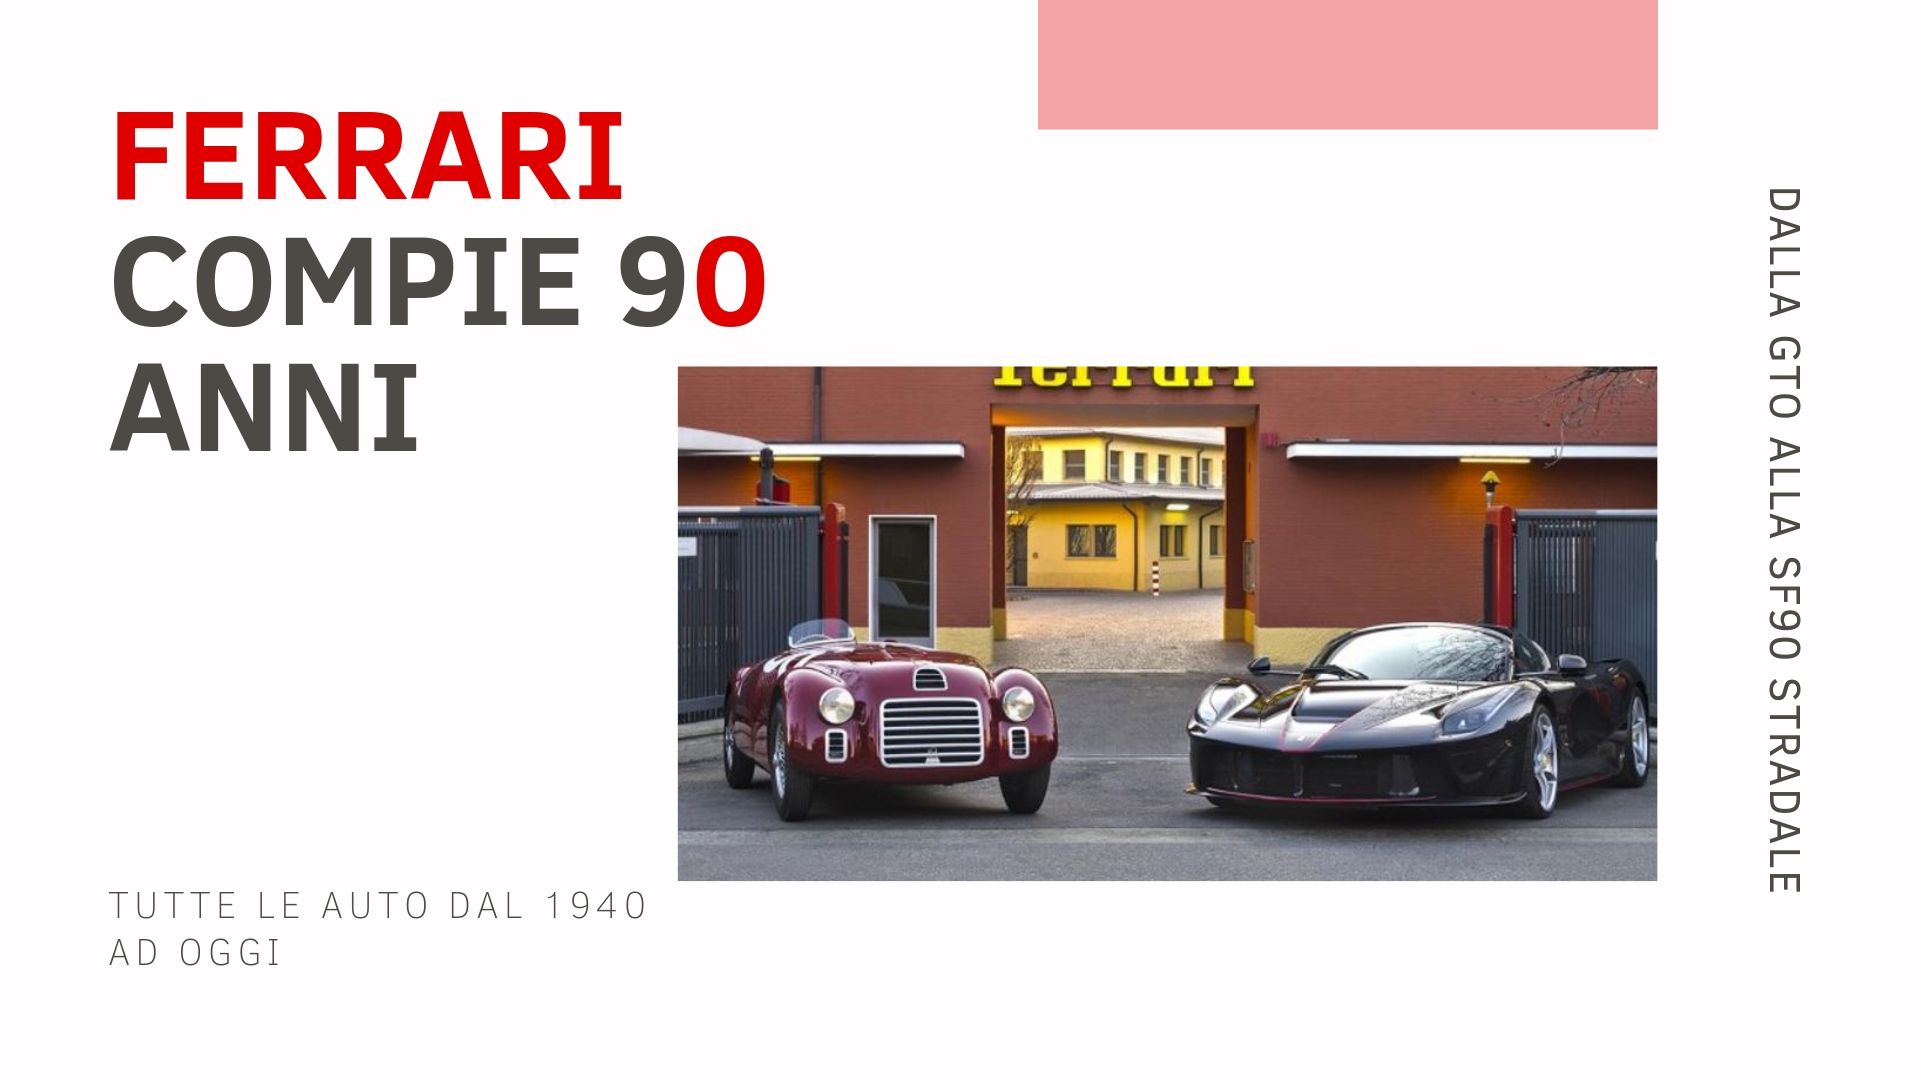 Ferrari compie 90 anni